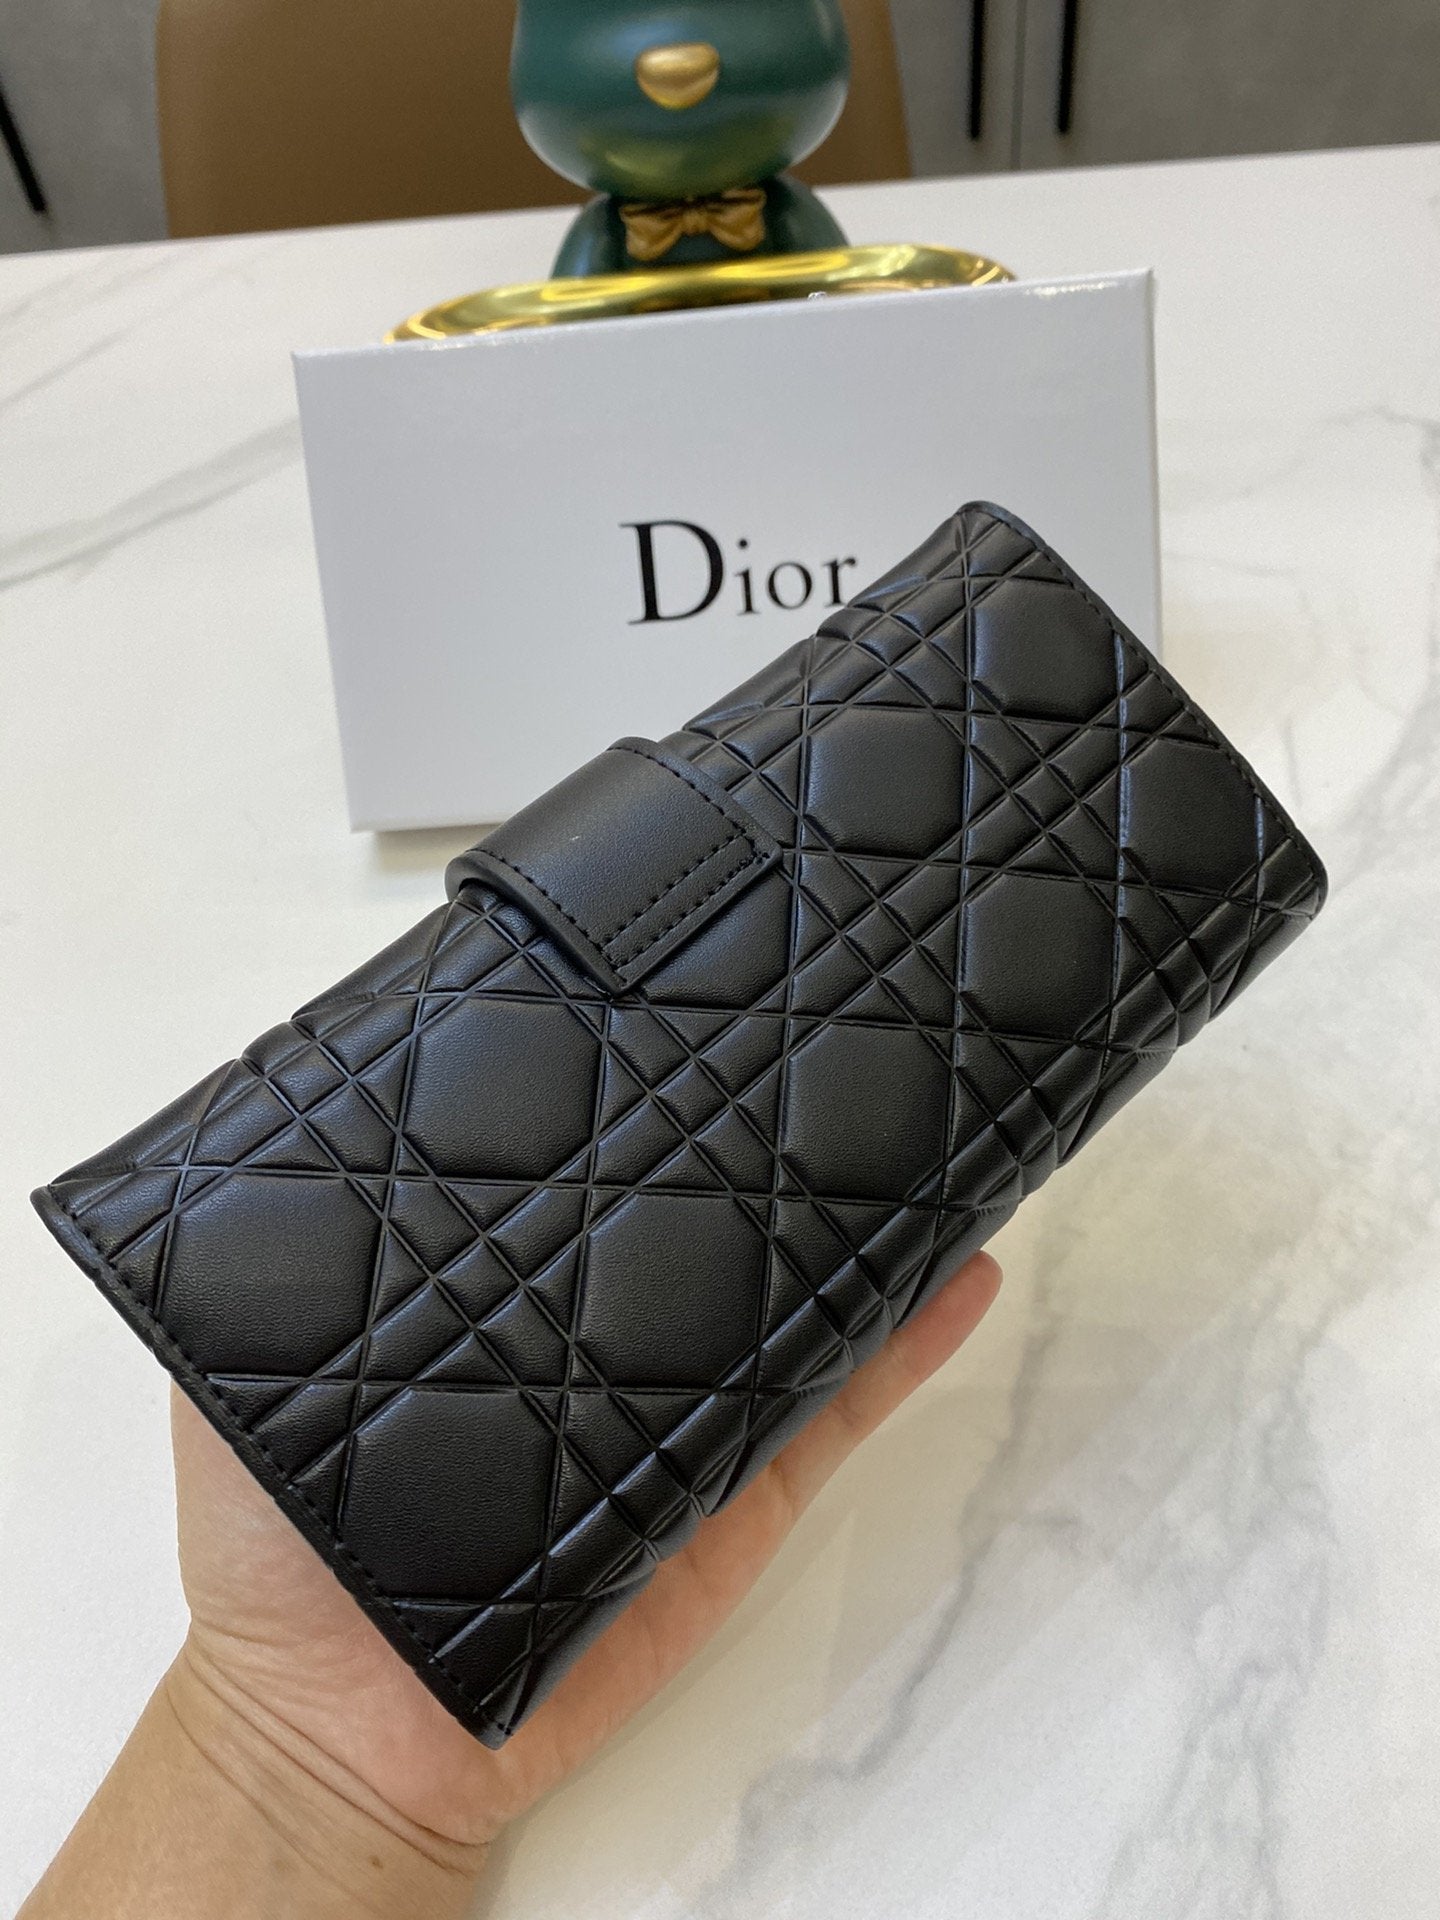 Dior CD fashion ladies new handbag wallet card holder